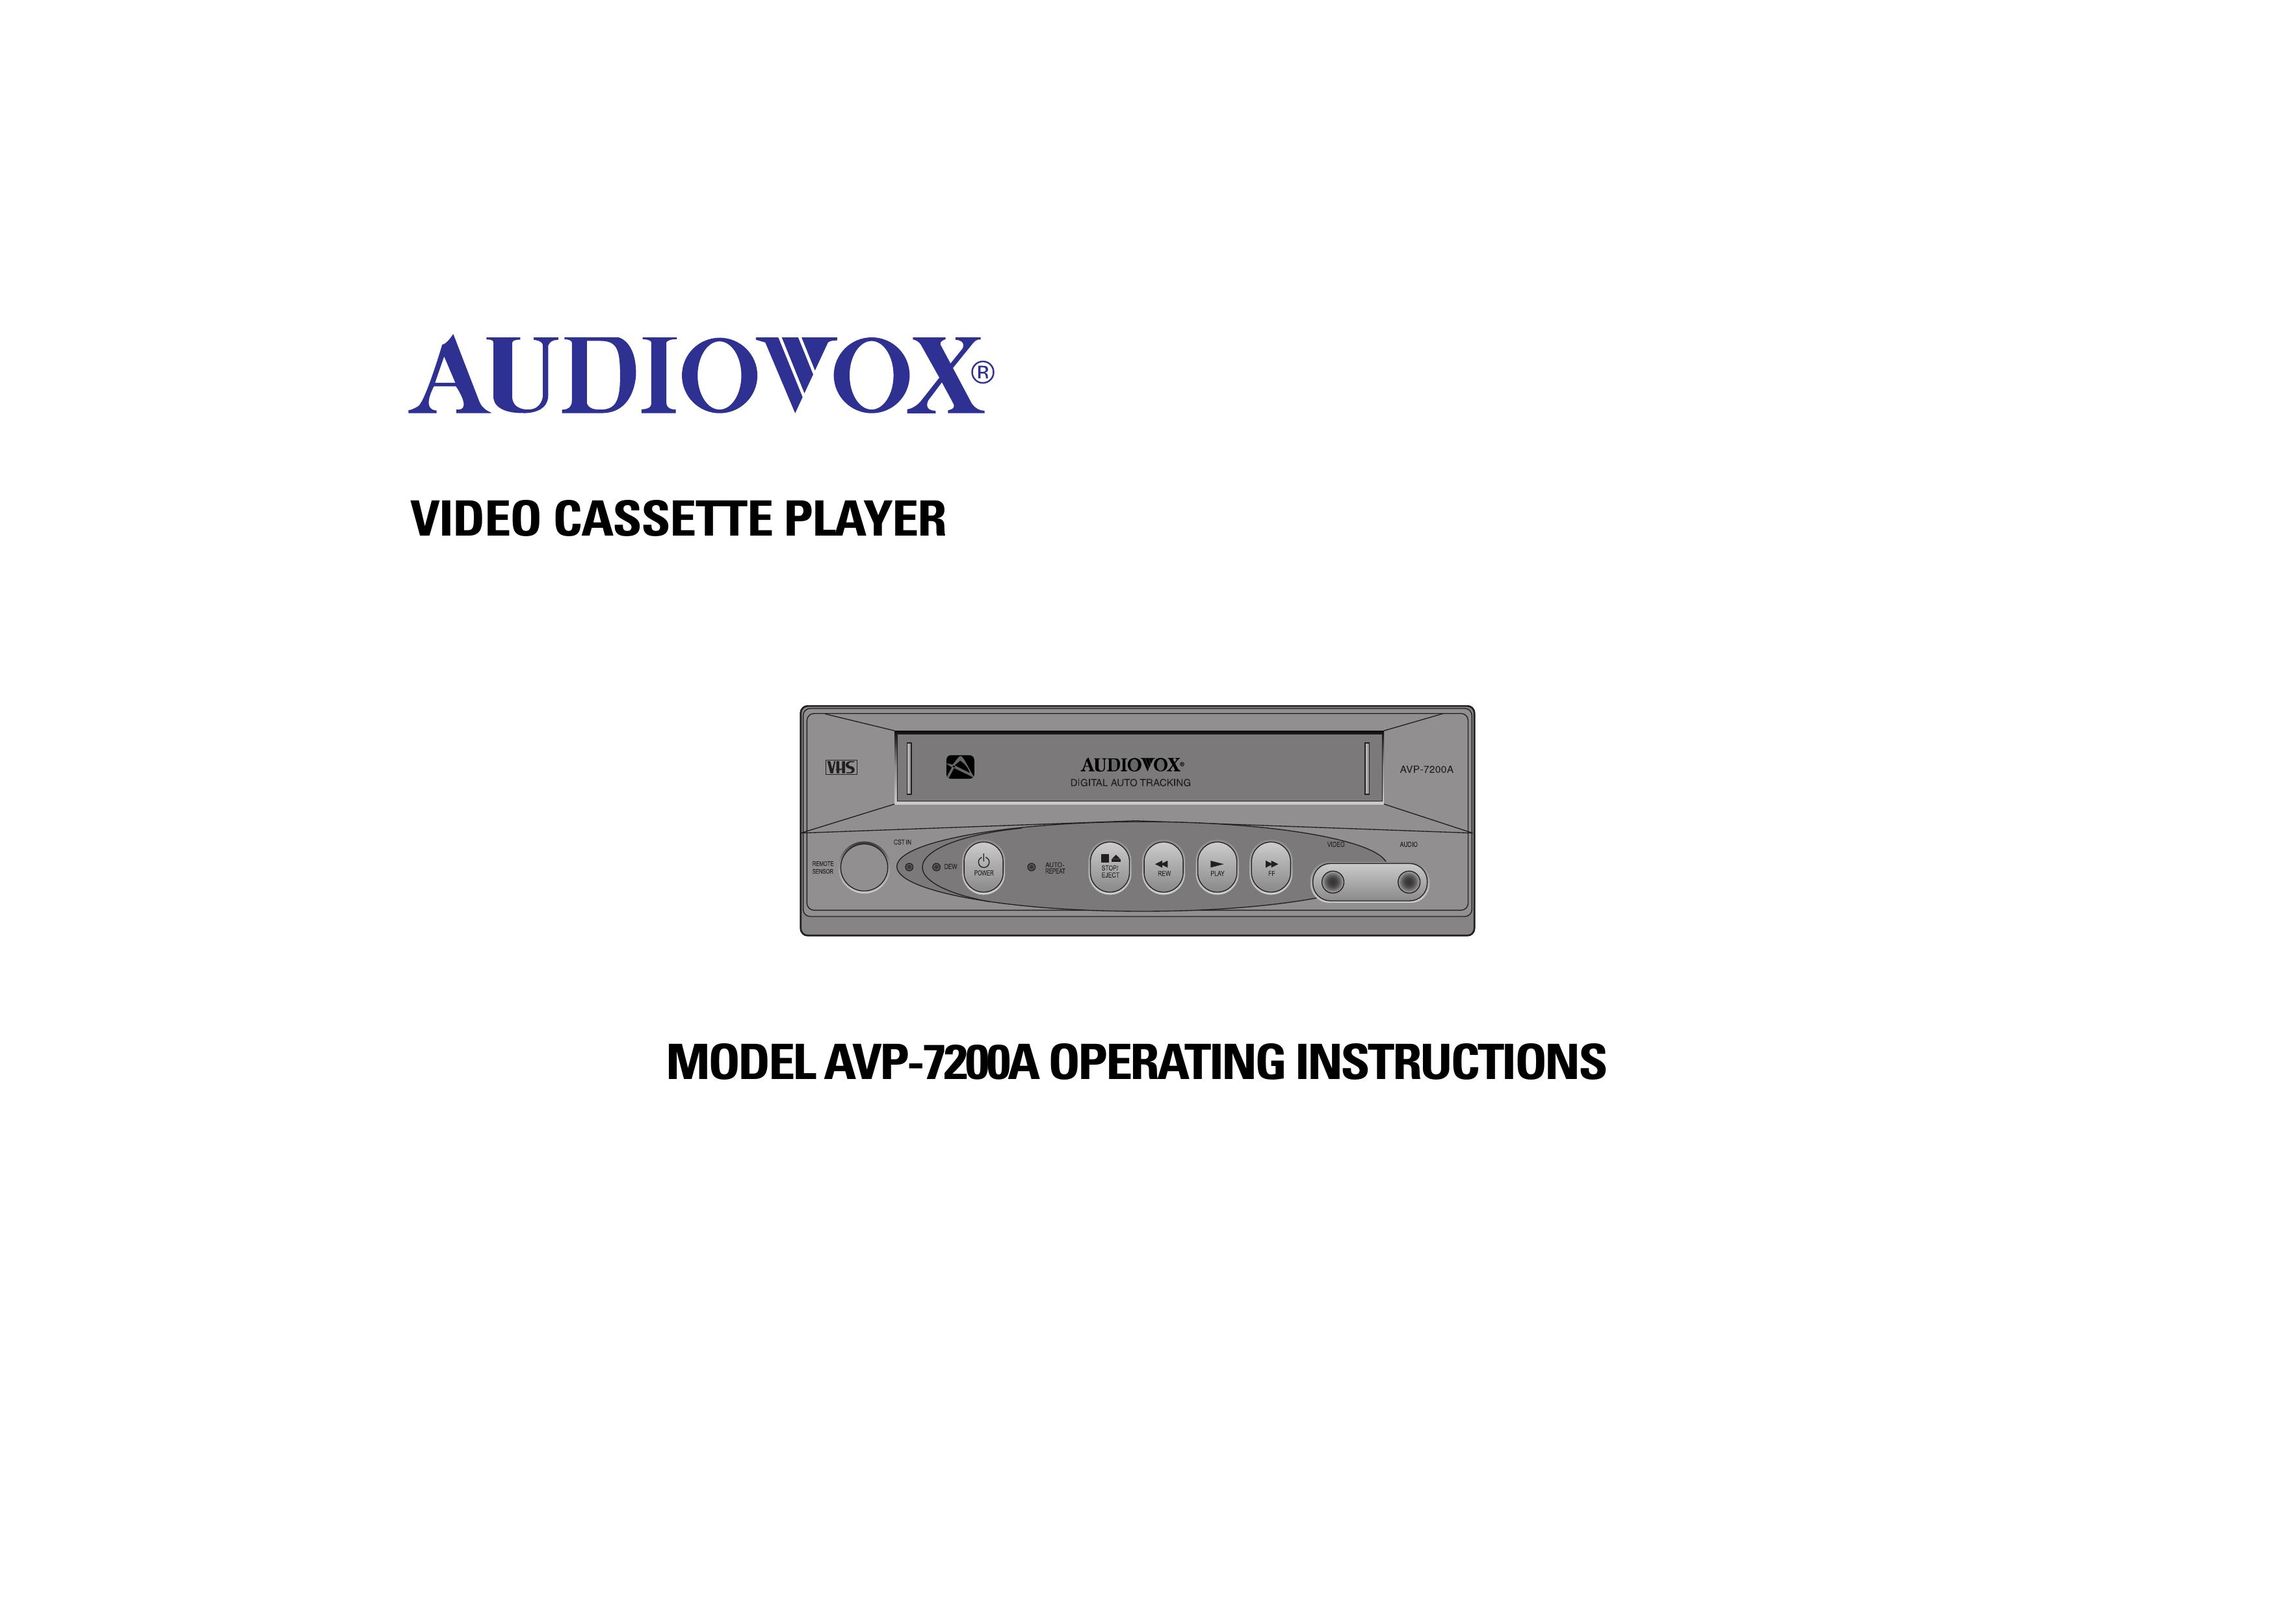 Audiovox AVP-7200A VCR User Manual